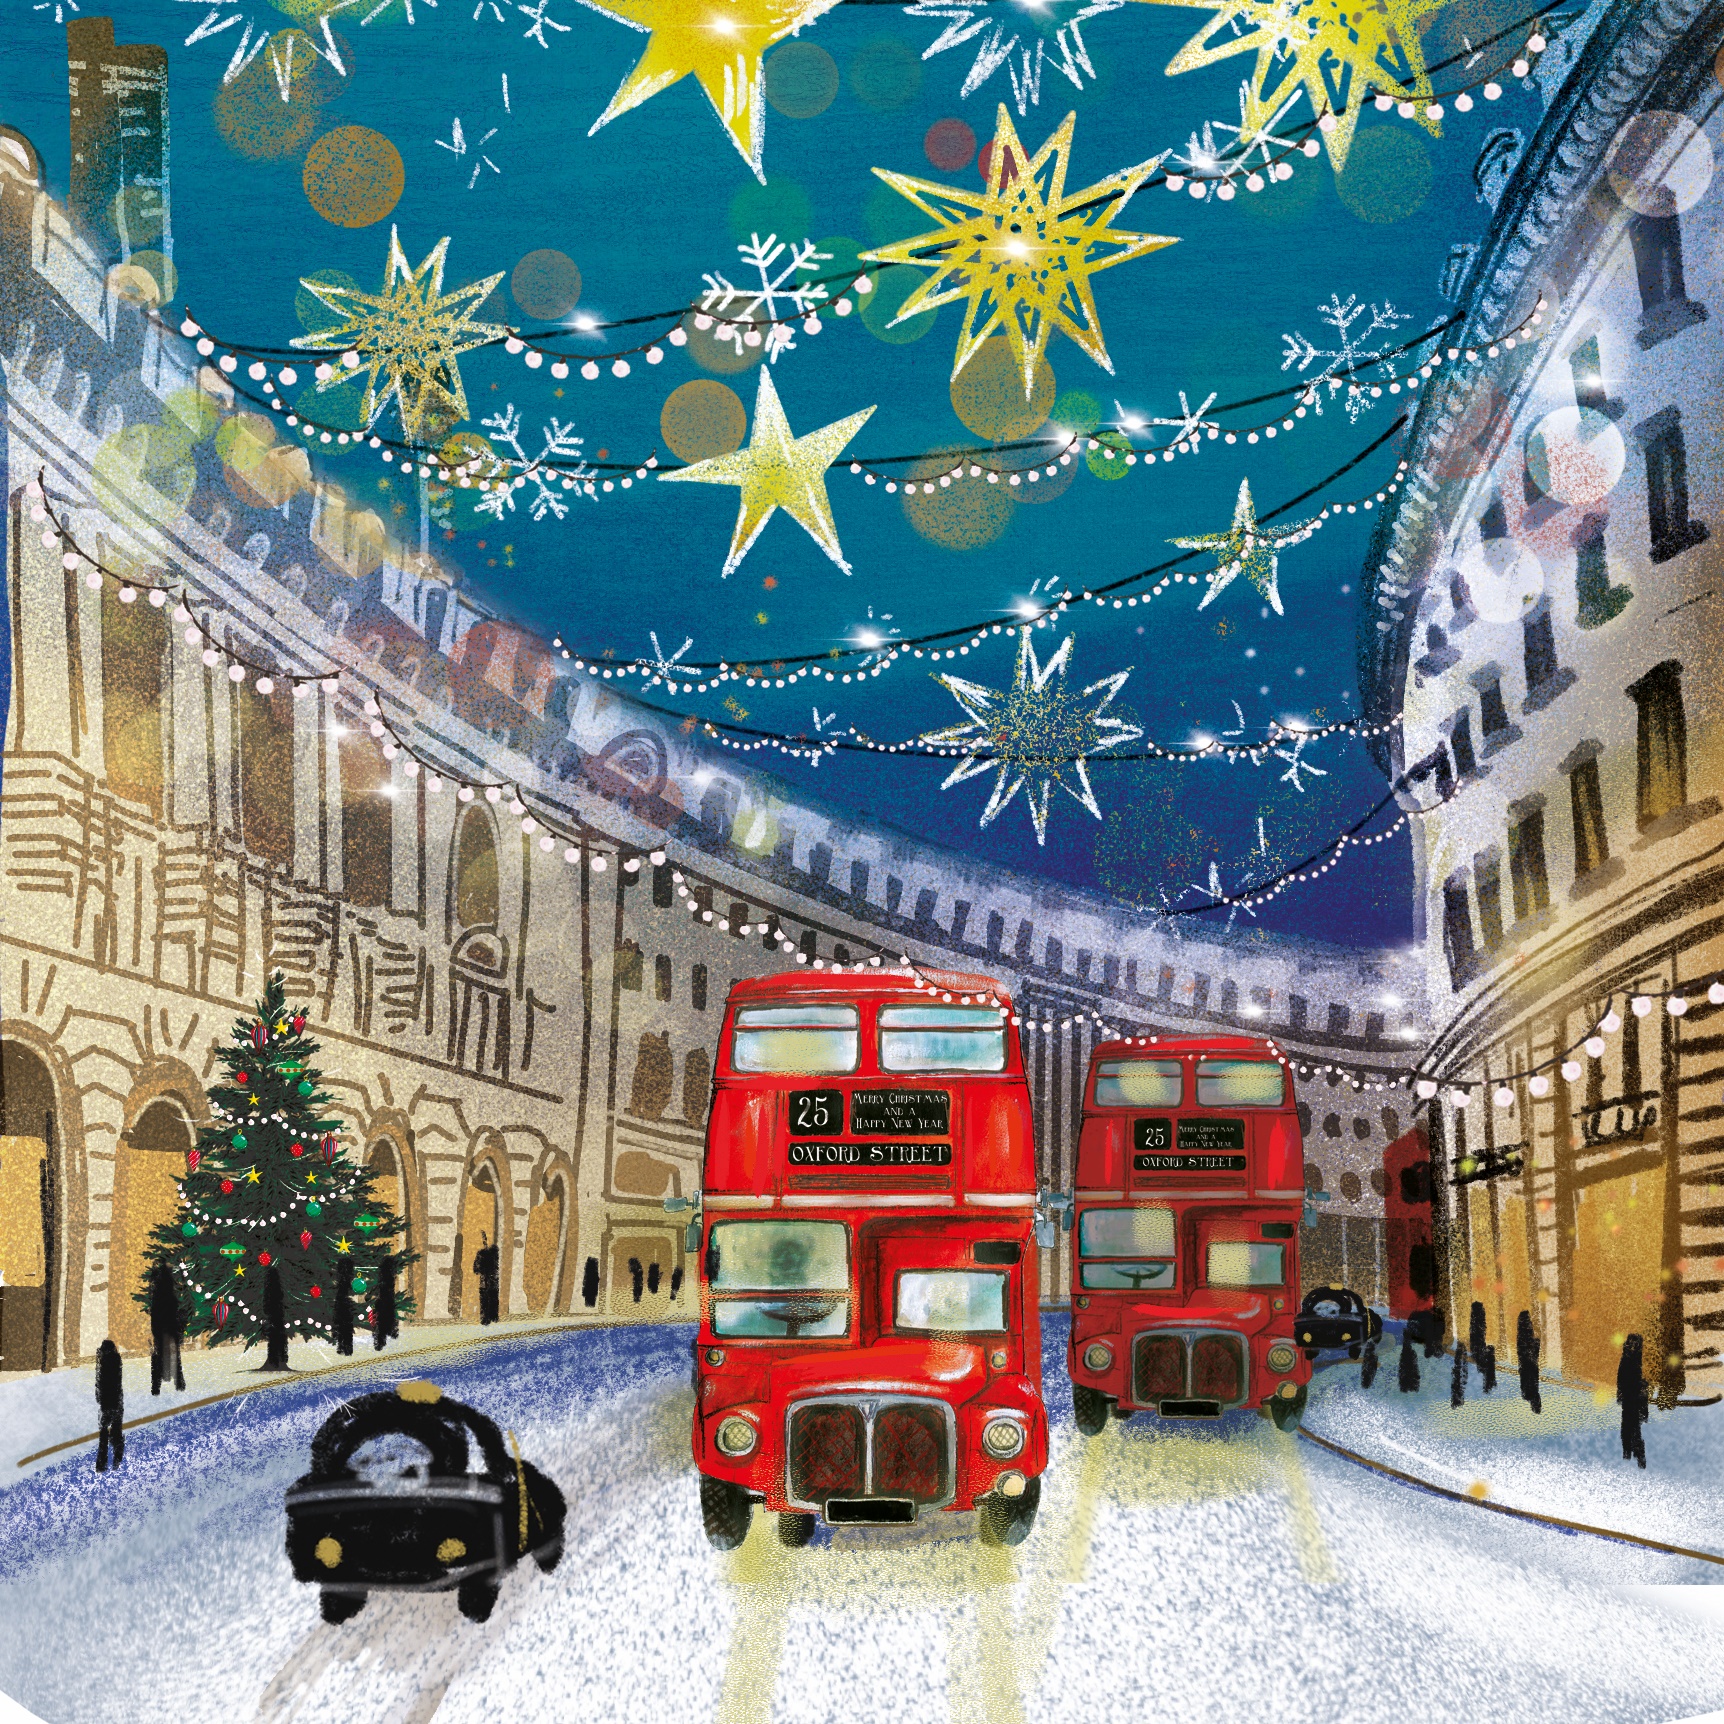 Oxford Street Charity Christmas Card